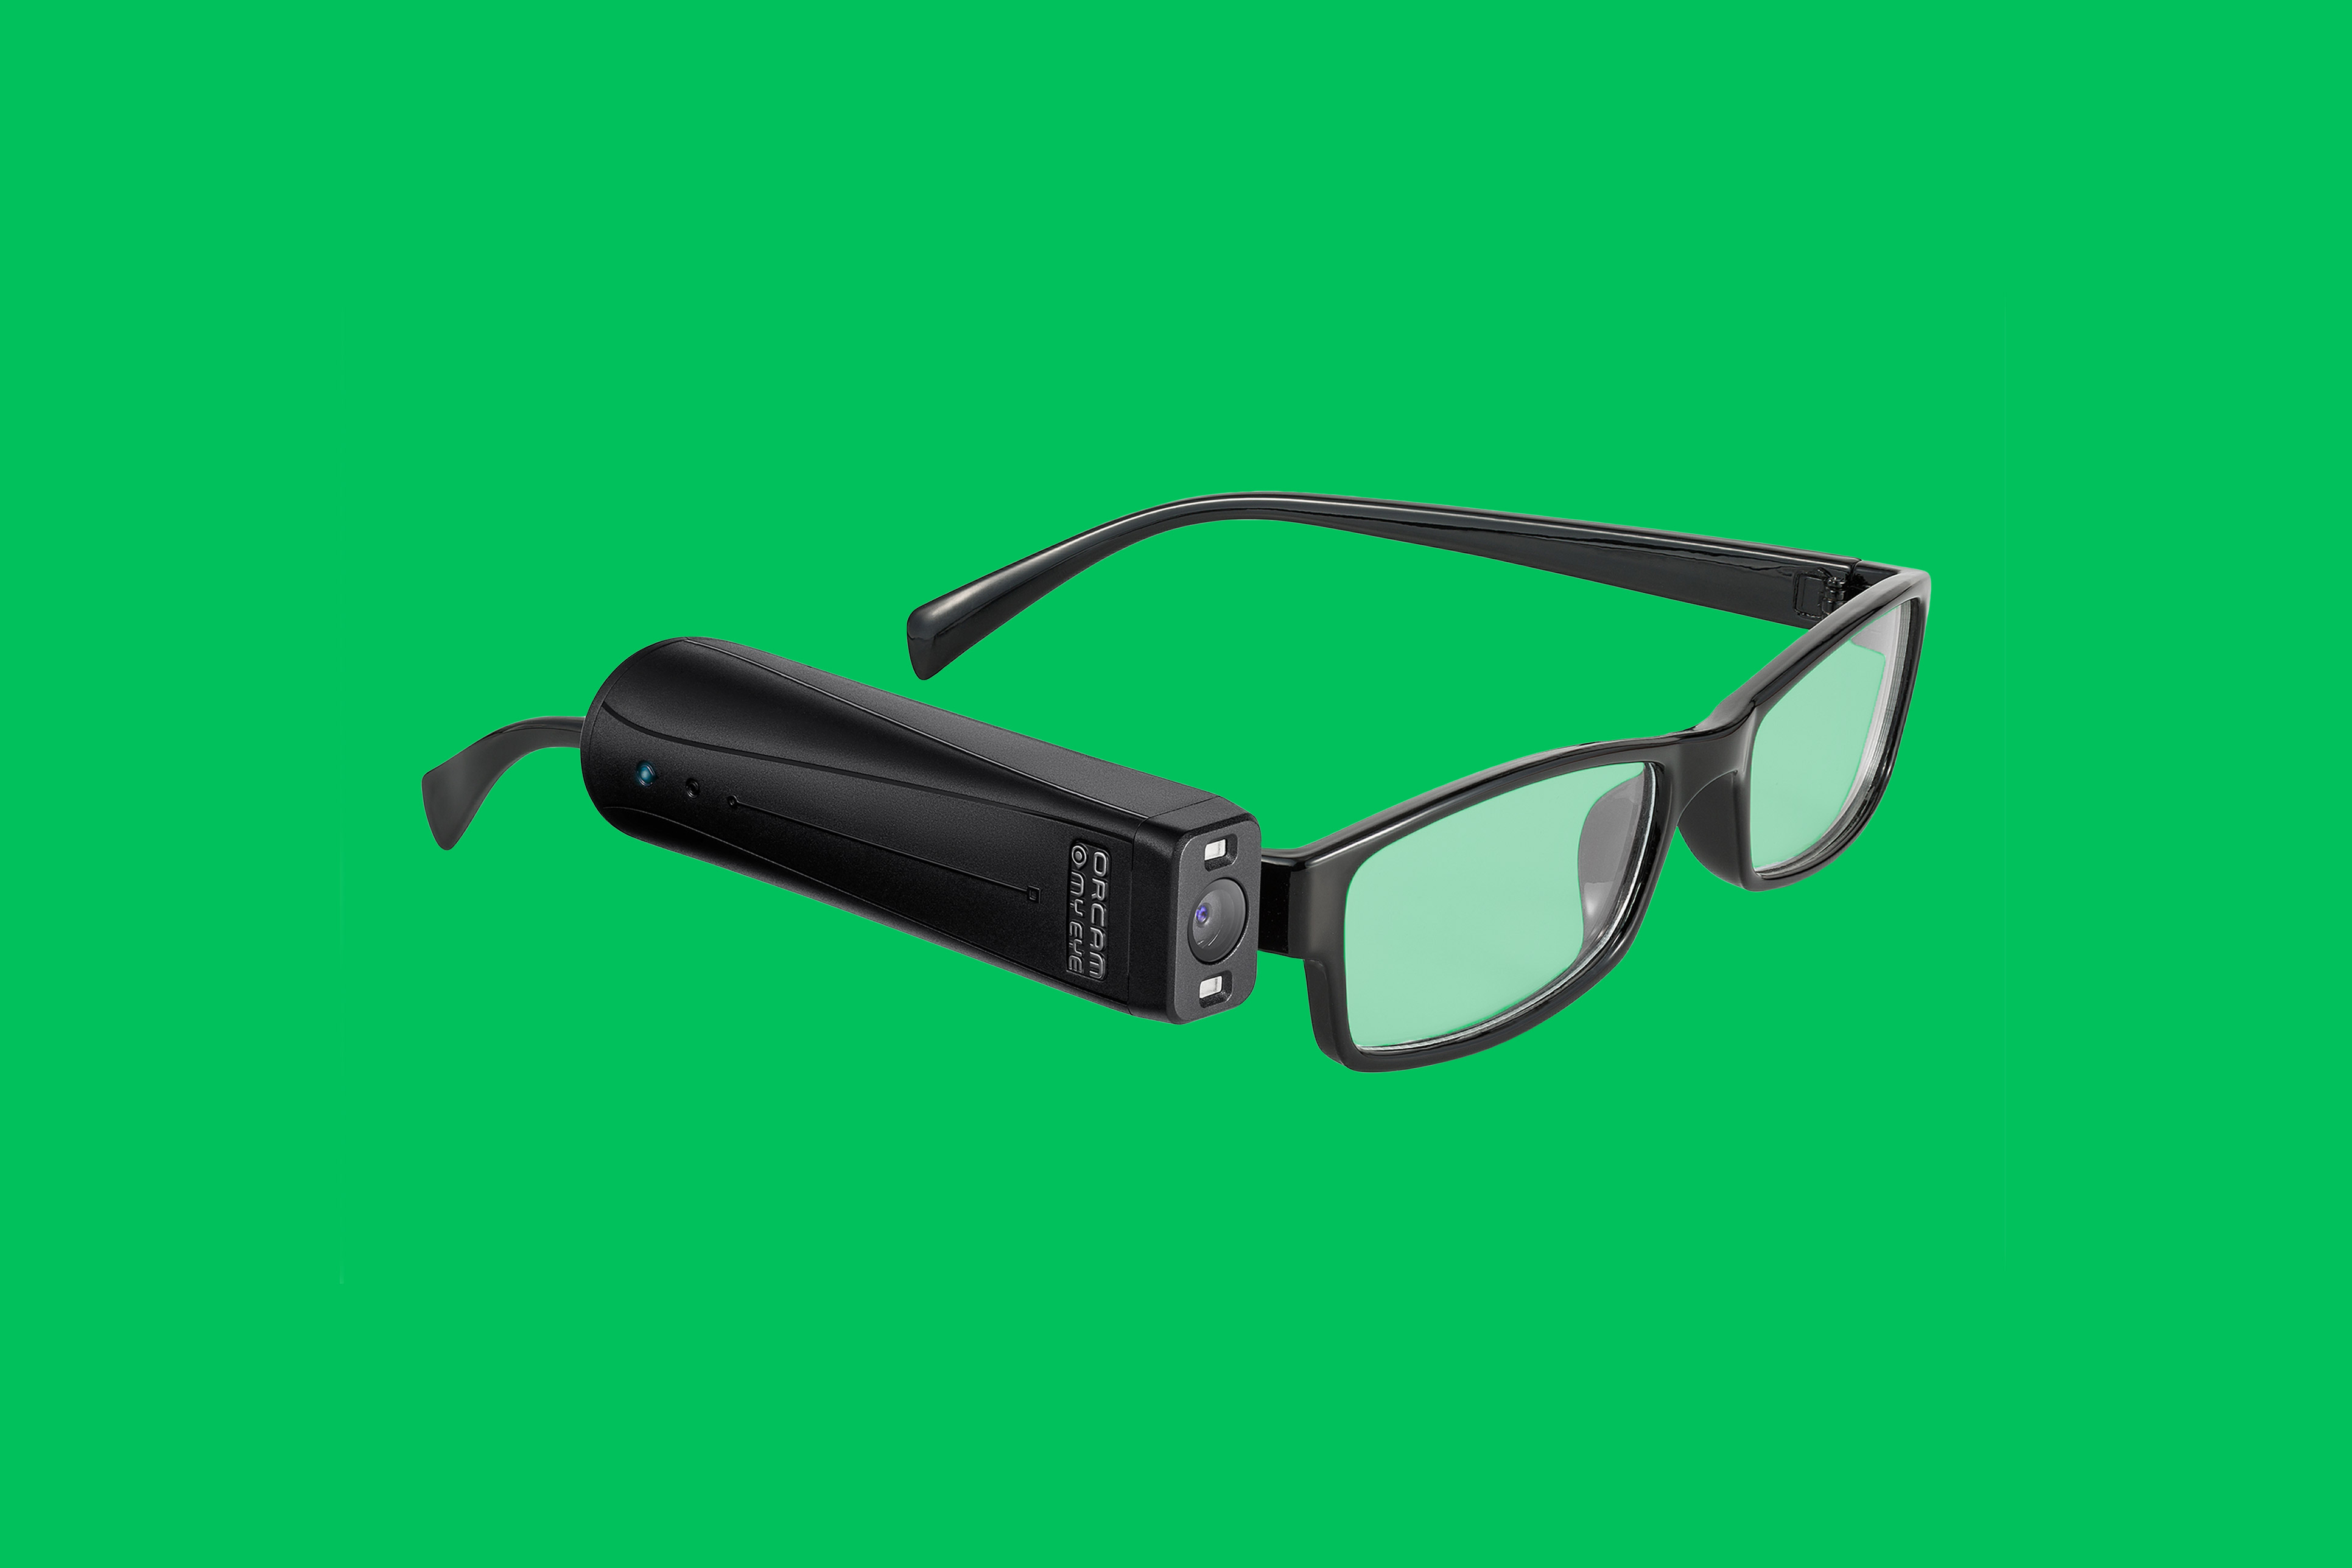 CARVE® Sunglasses, Goggles & Apparel | Australia